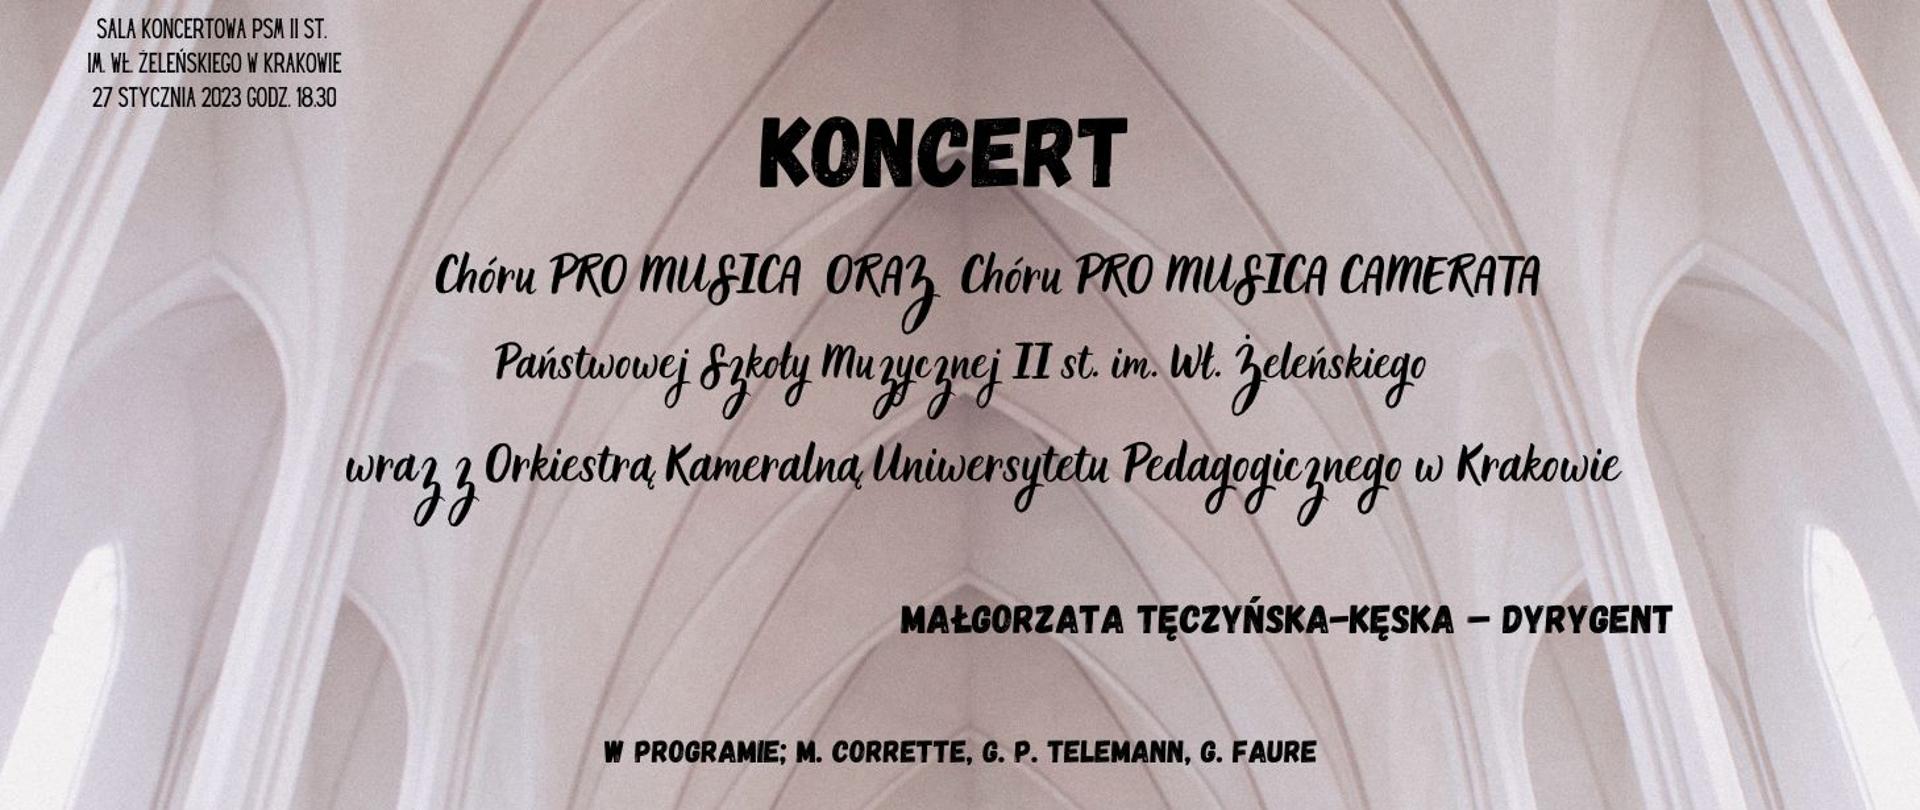 plakat sklepienie napis koncert chóru pro musica oraz pro musica camerata 27.01.2023